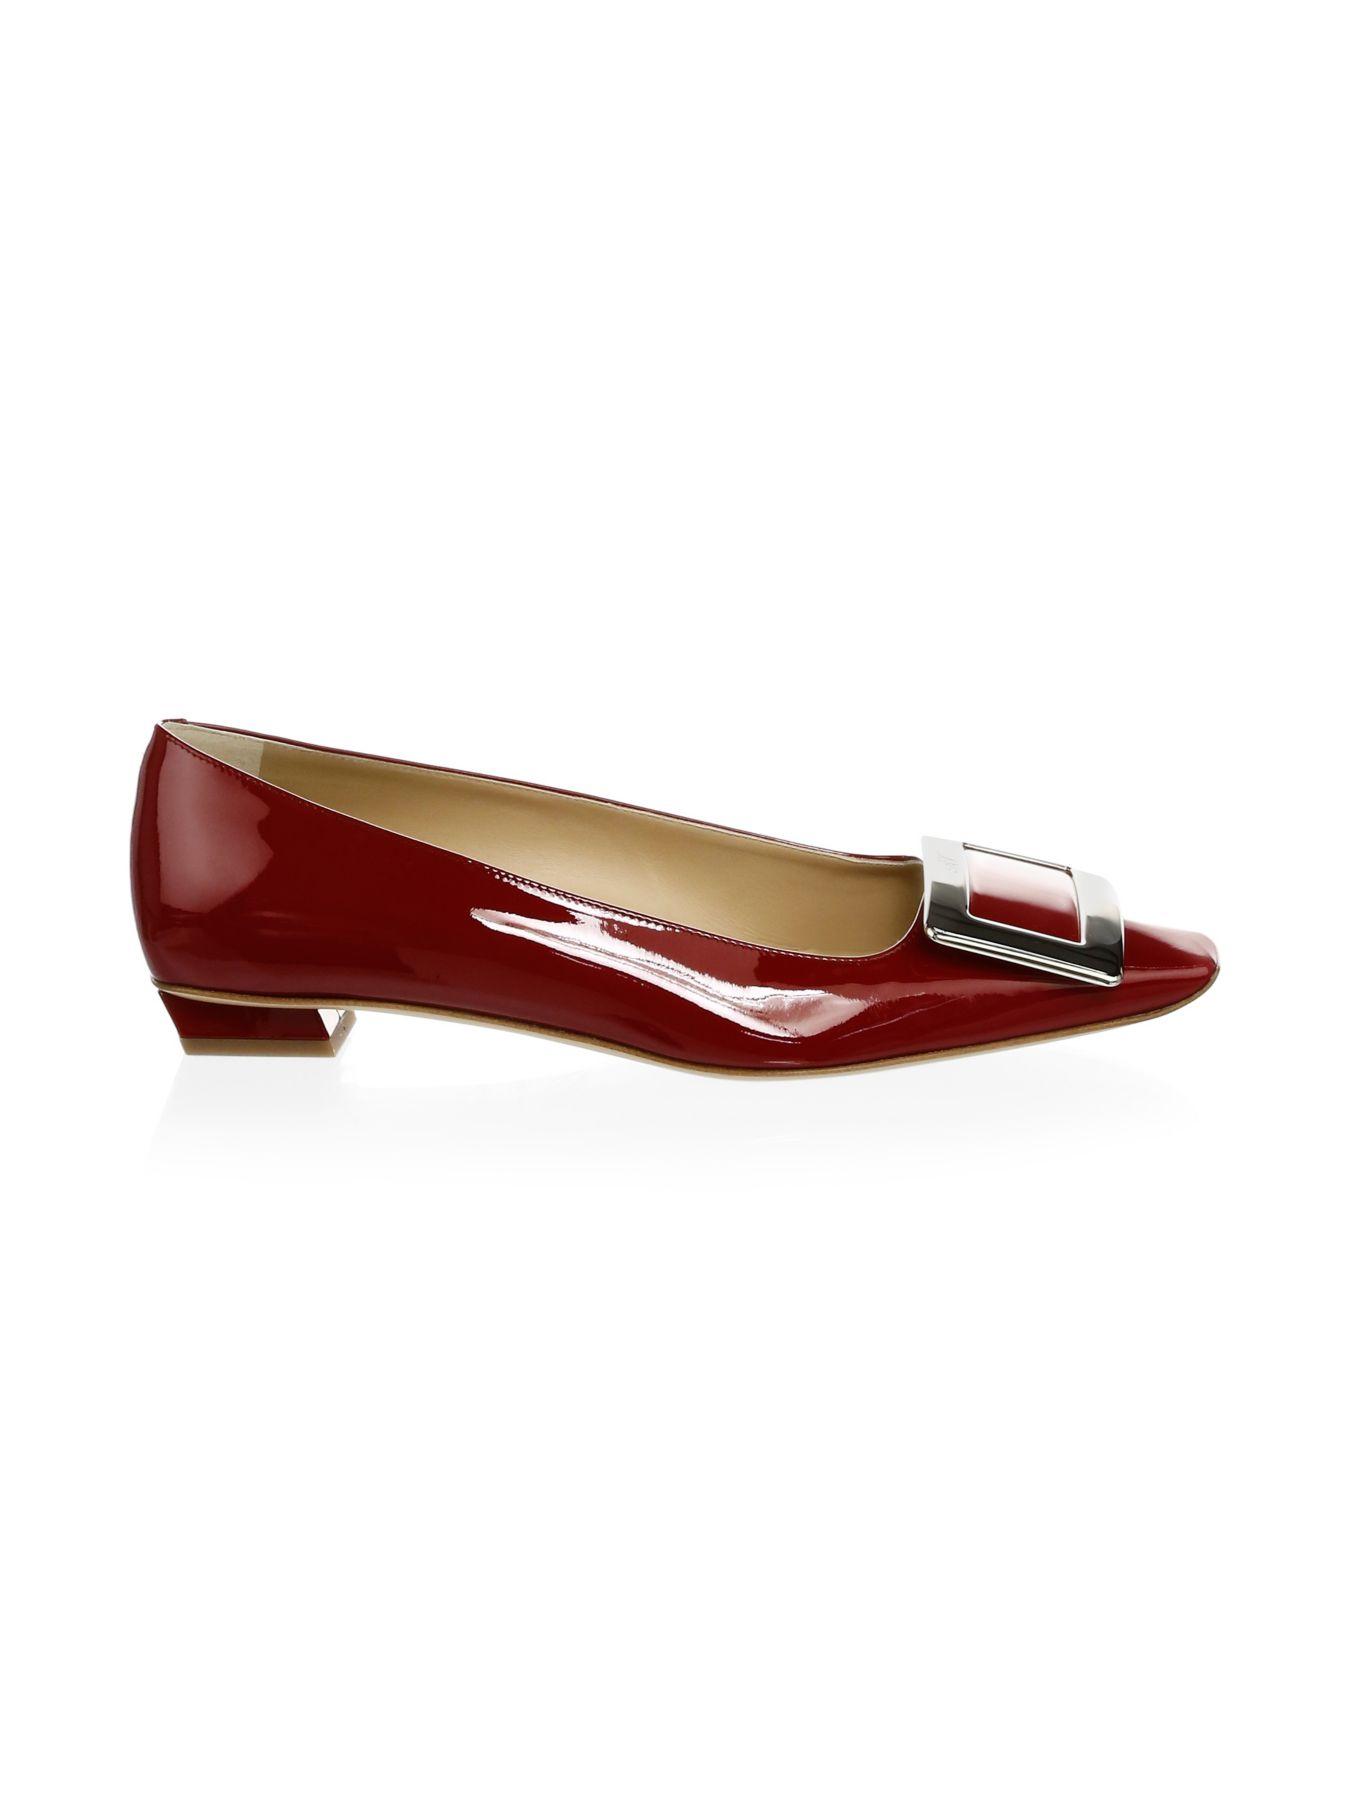 Roger Vivier Belle Vivier Patent Leather Mid-heel Flats in Red - Lyst